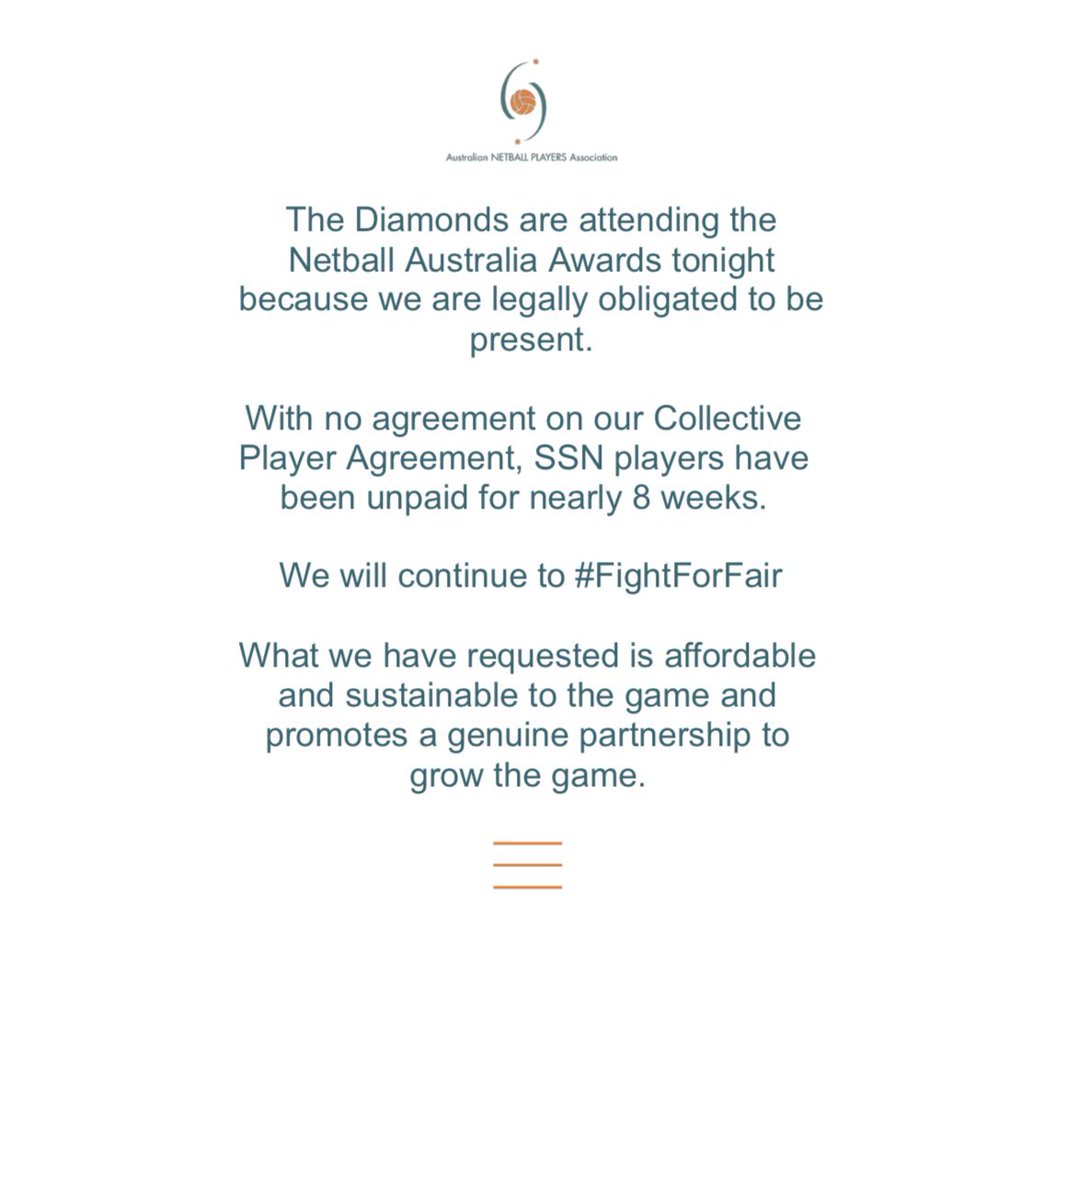 Thinking of our SSN playing group tonight, unpaid yet still united #FightForFair @AusNetballPA